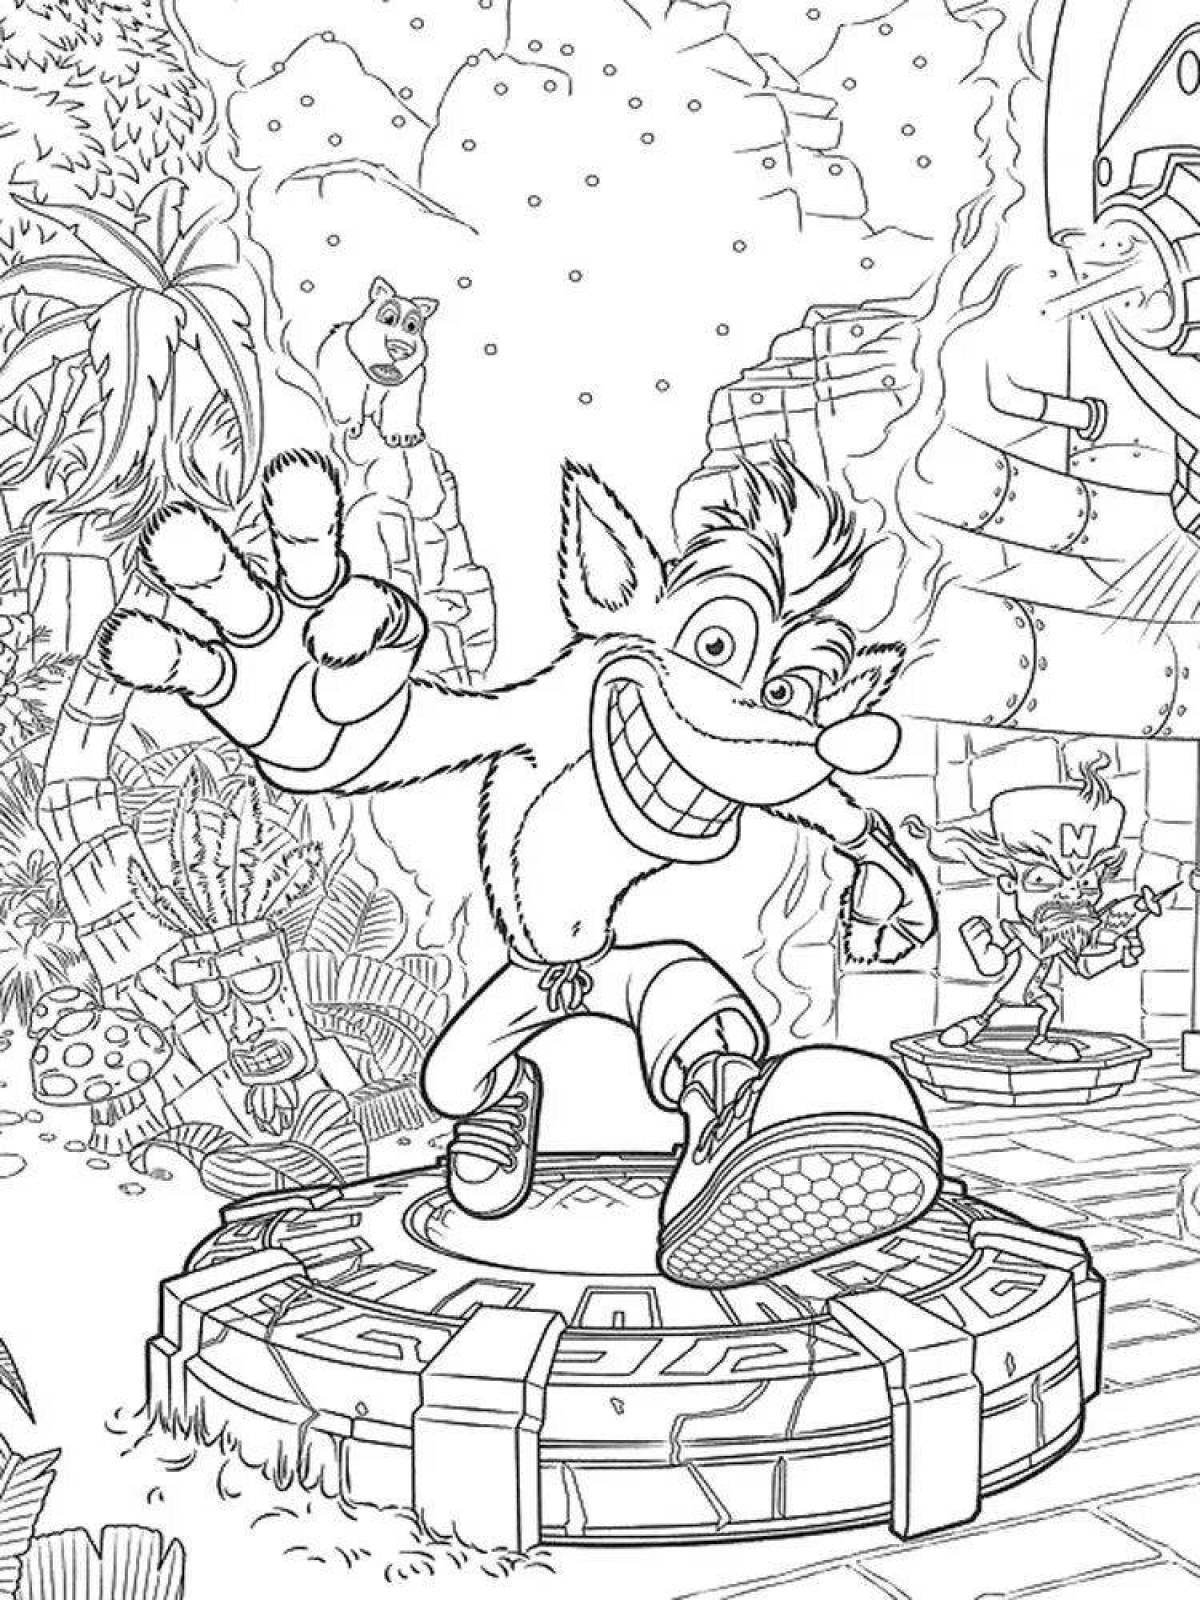 Crash bandicoot coloring book